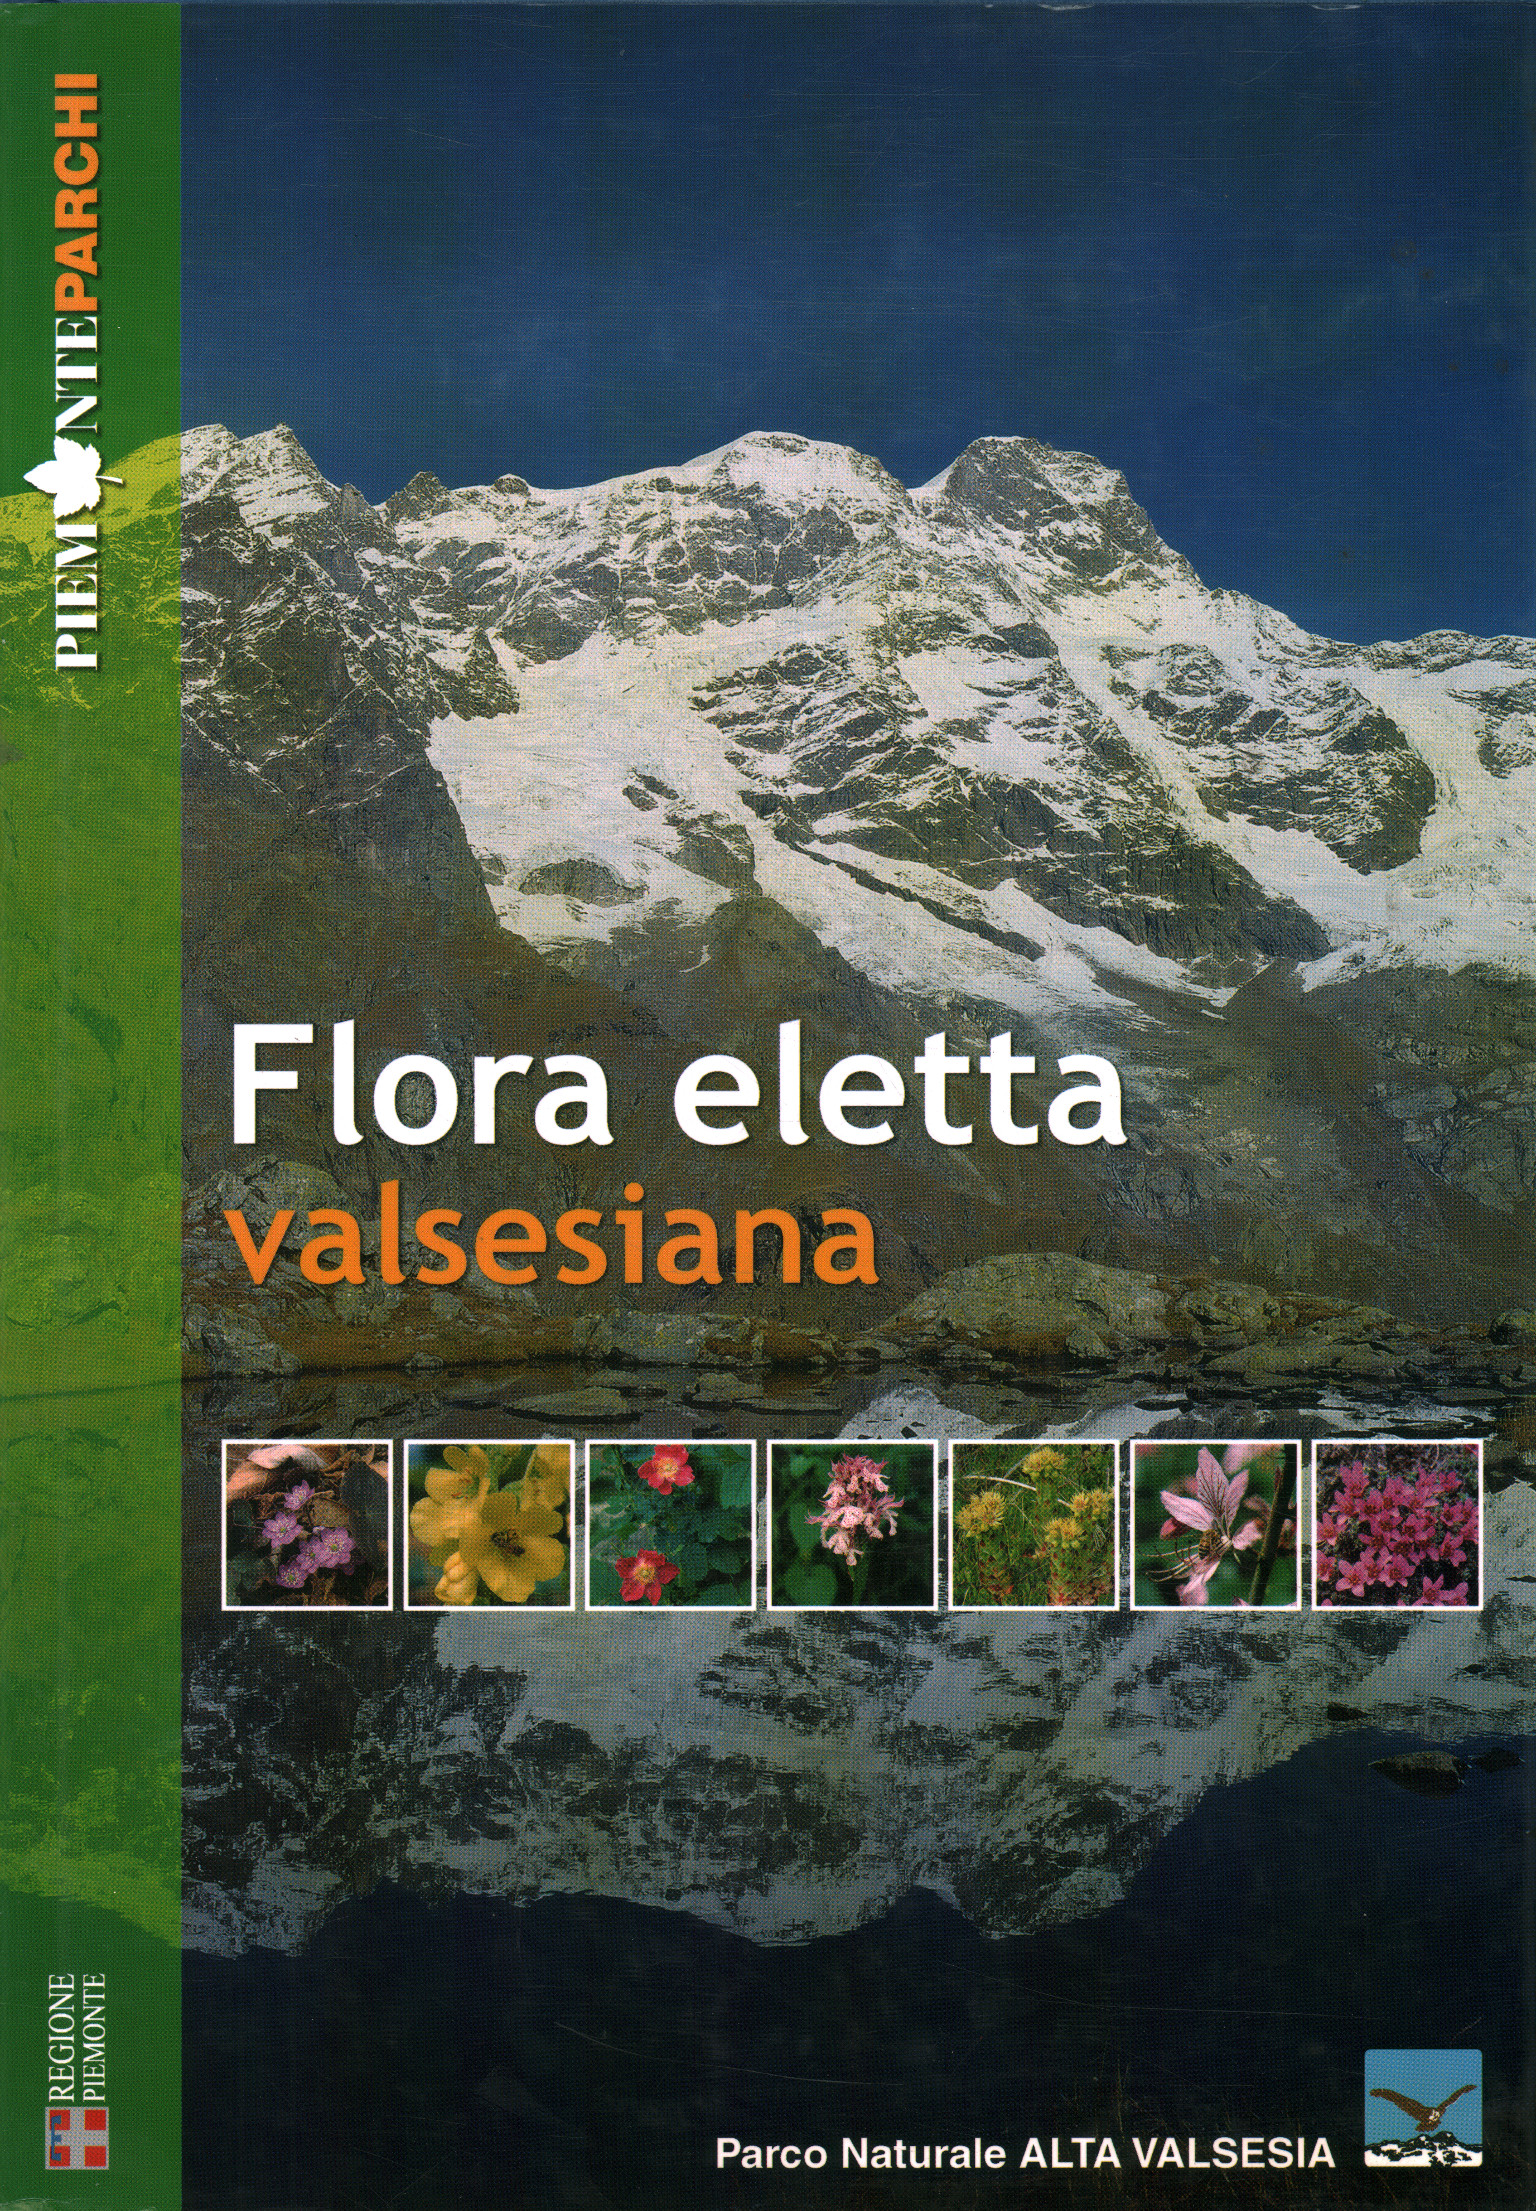 Flora chosen from Valsesiana